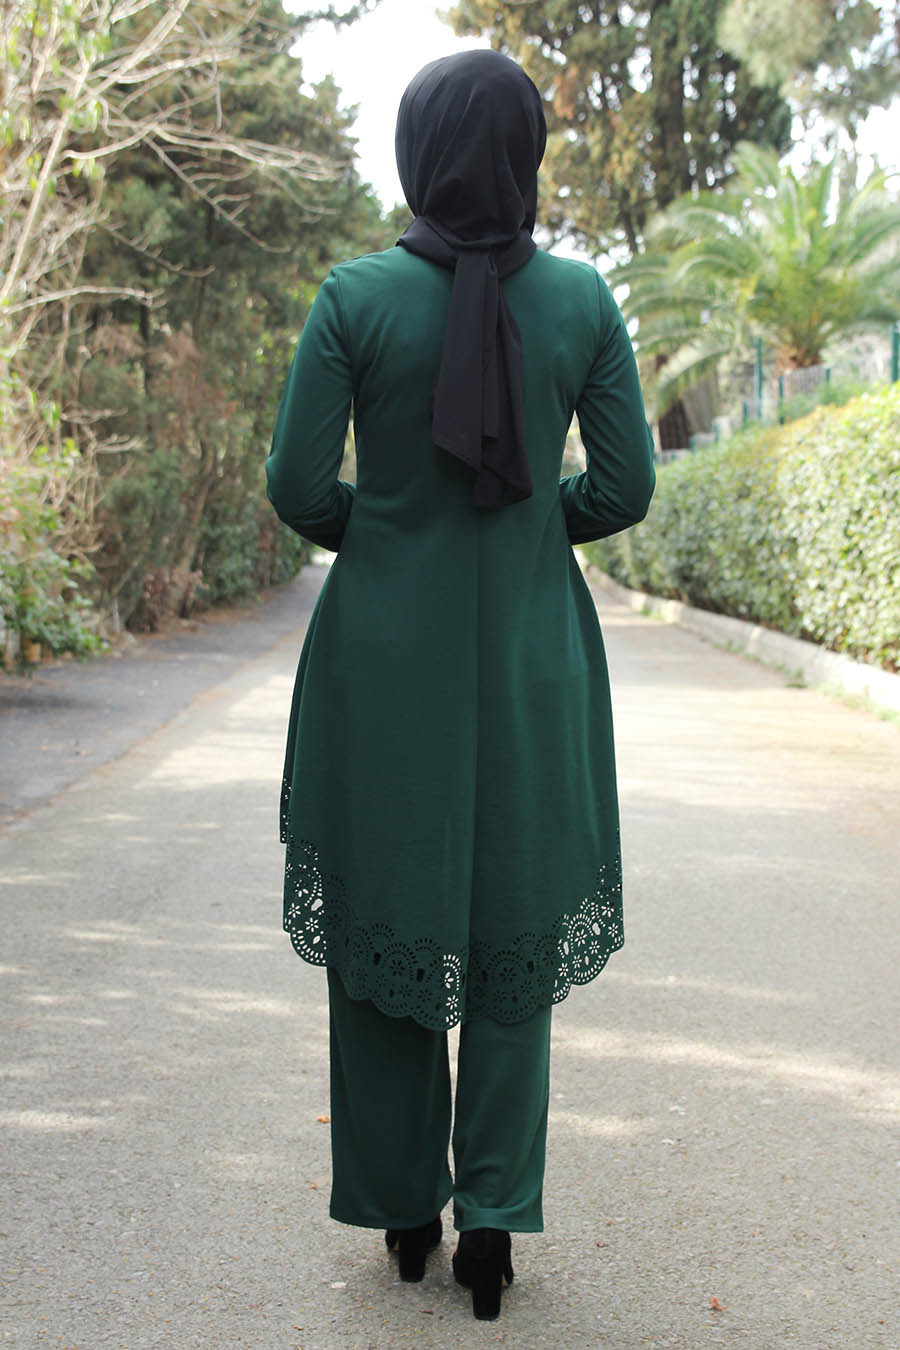 Feiza Collection - Lazer Kesim İkili Takım - Yeşil